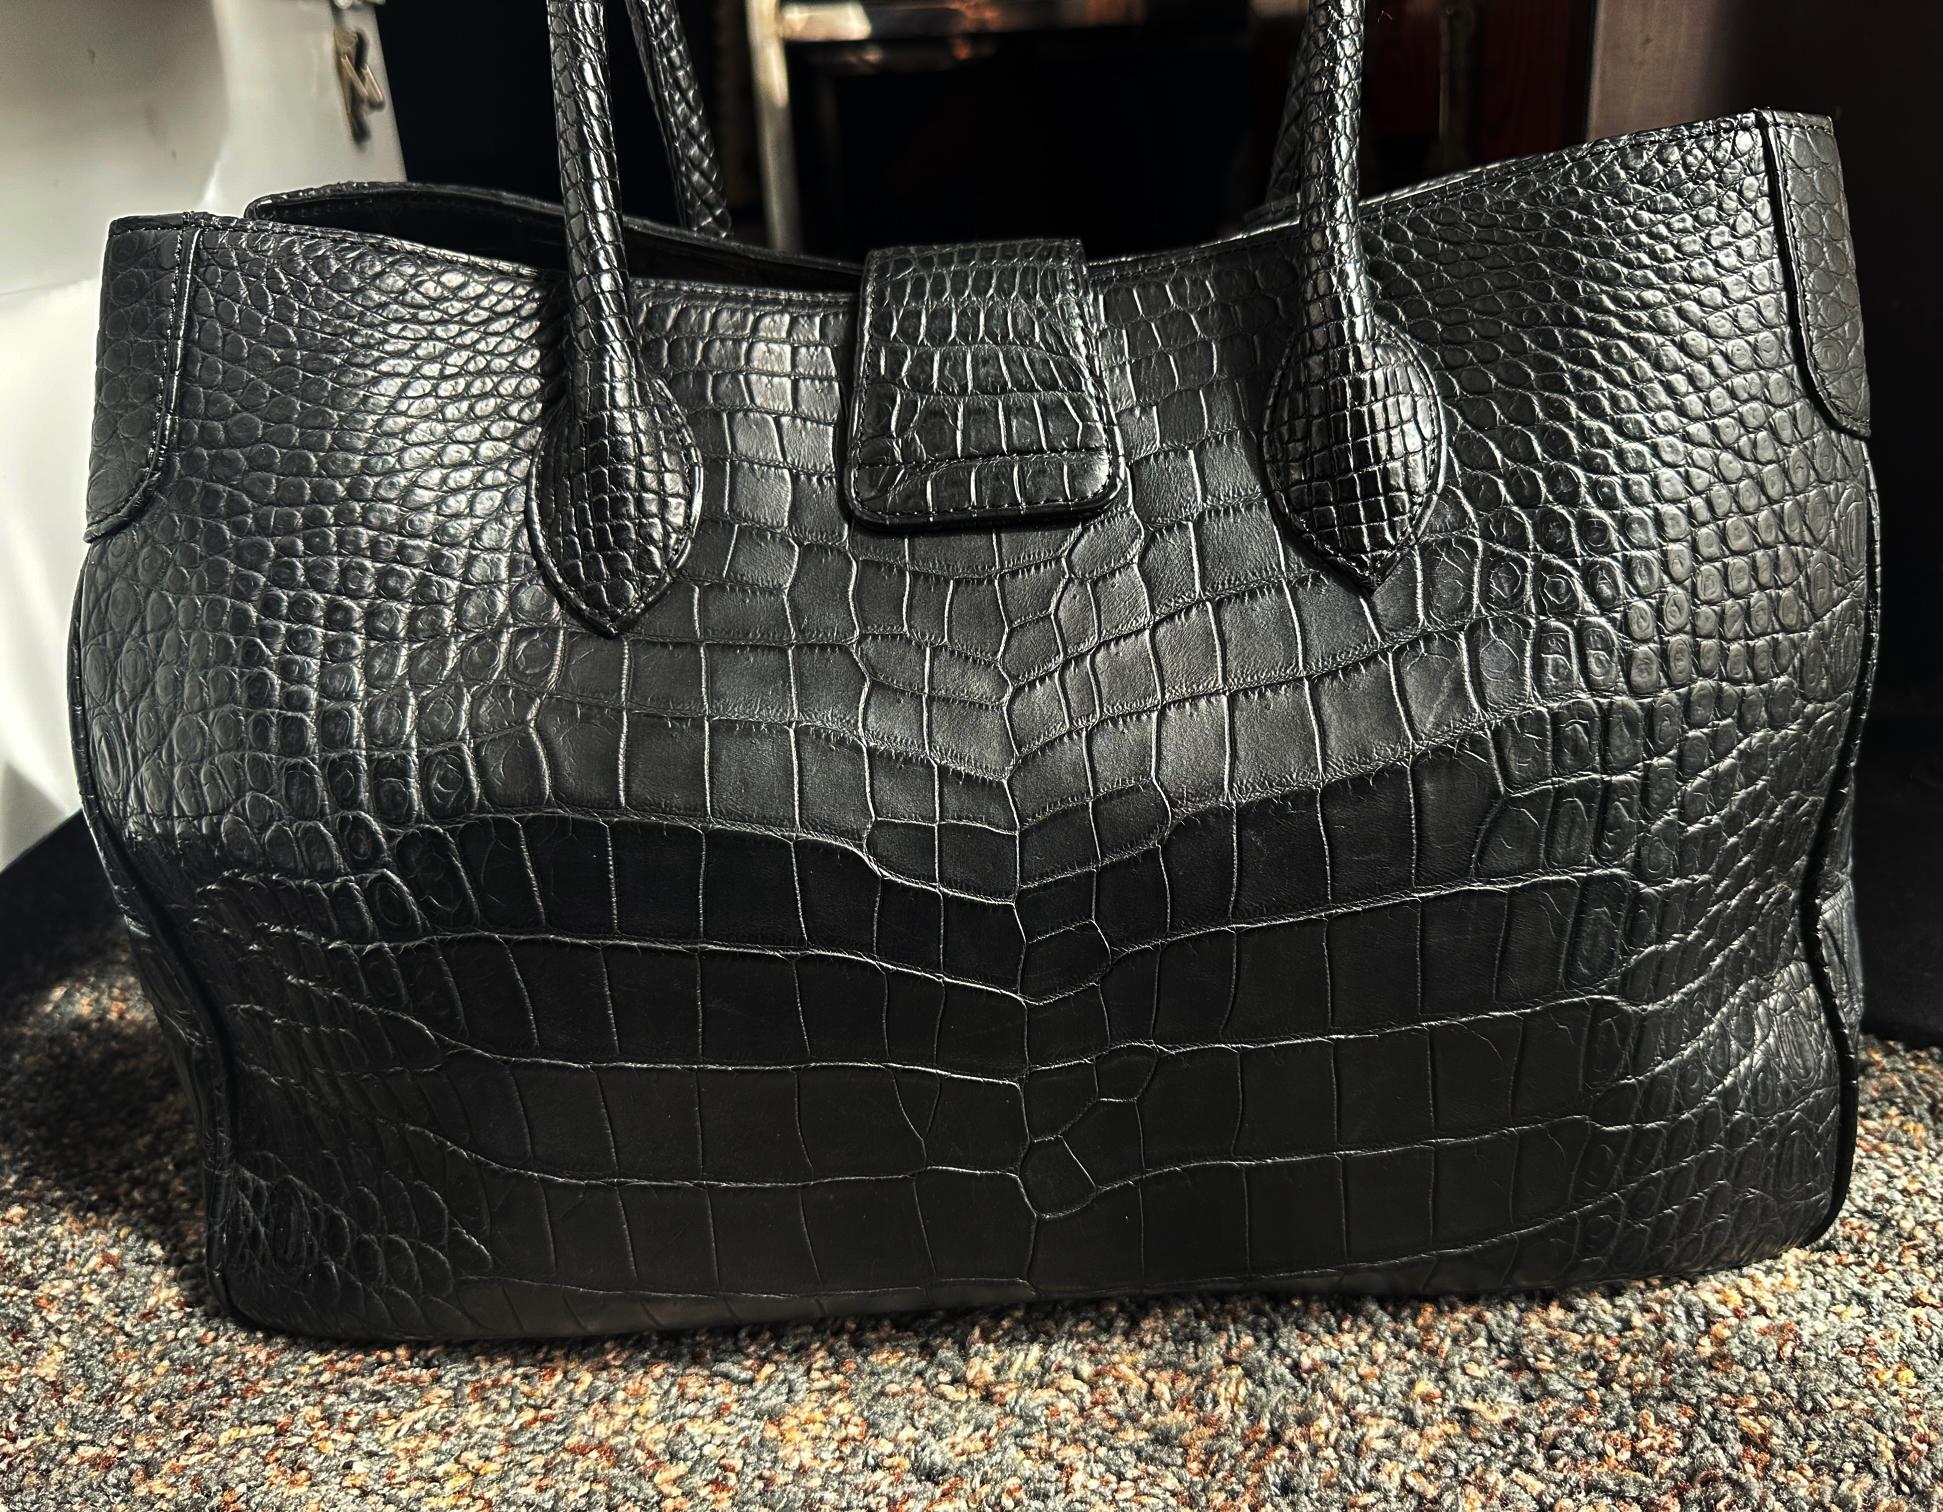 Luxury Black Matte Authentic Crocodile Leather Handbag In Good Condition For Sale In Newport Coast, CA